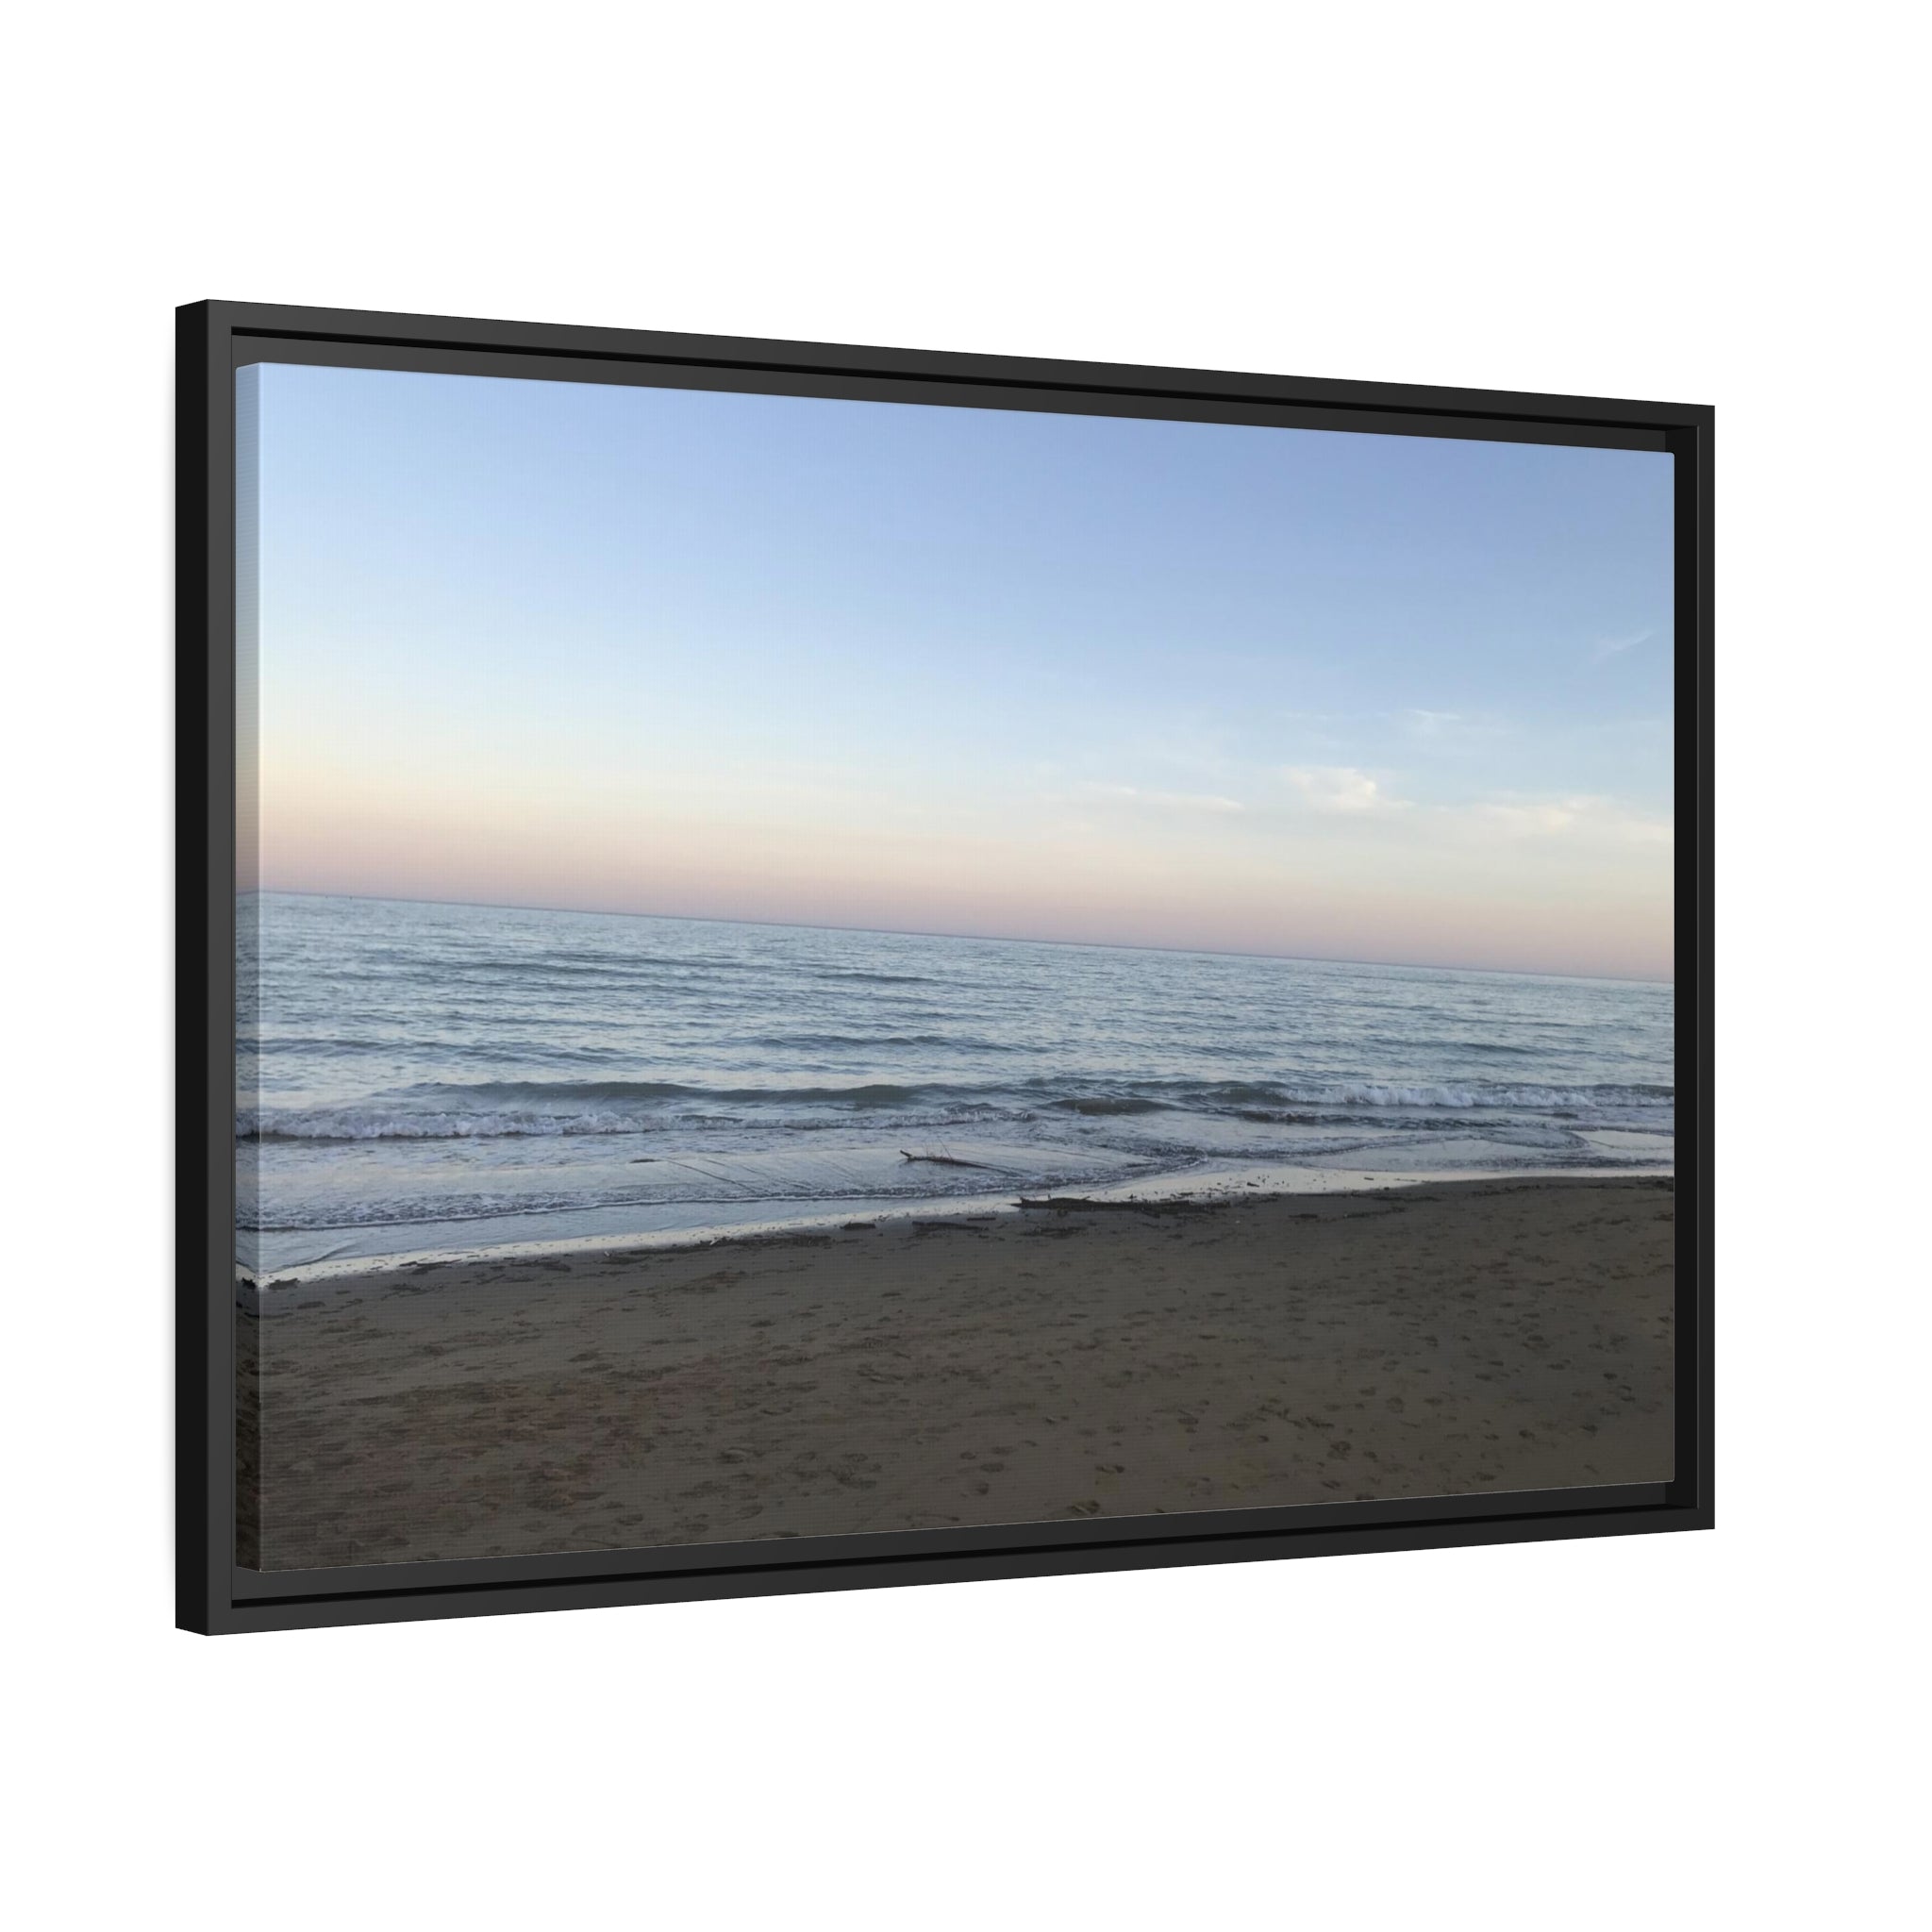 Adriatic Sea, Italian Beaches, Matte Canvas, Black Frame